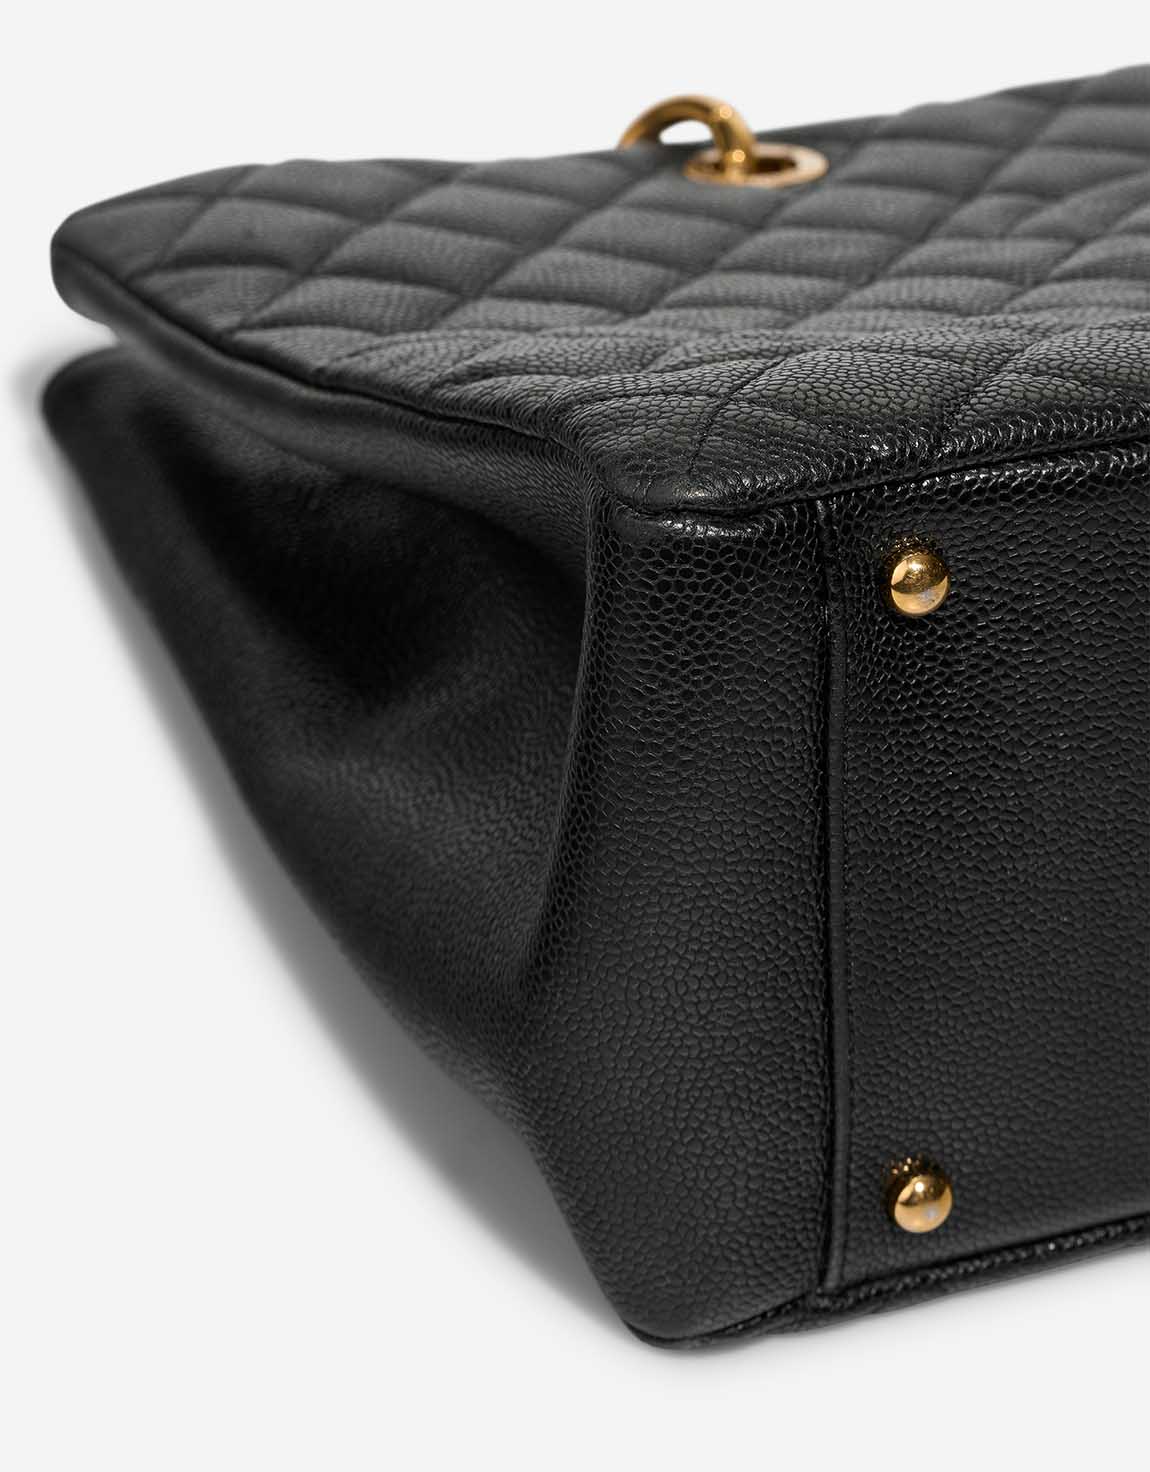 Chanel GST Grande Black signs of wear | Sell your designer bag on Saclab.com